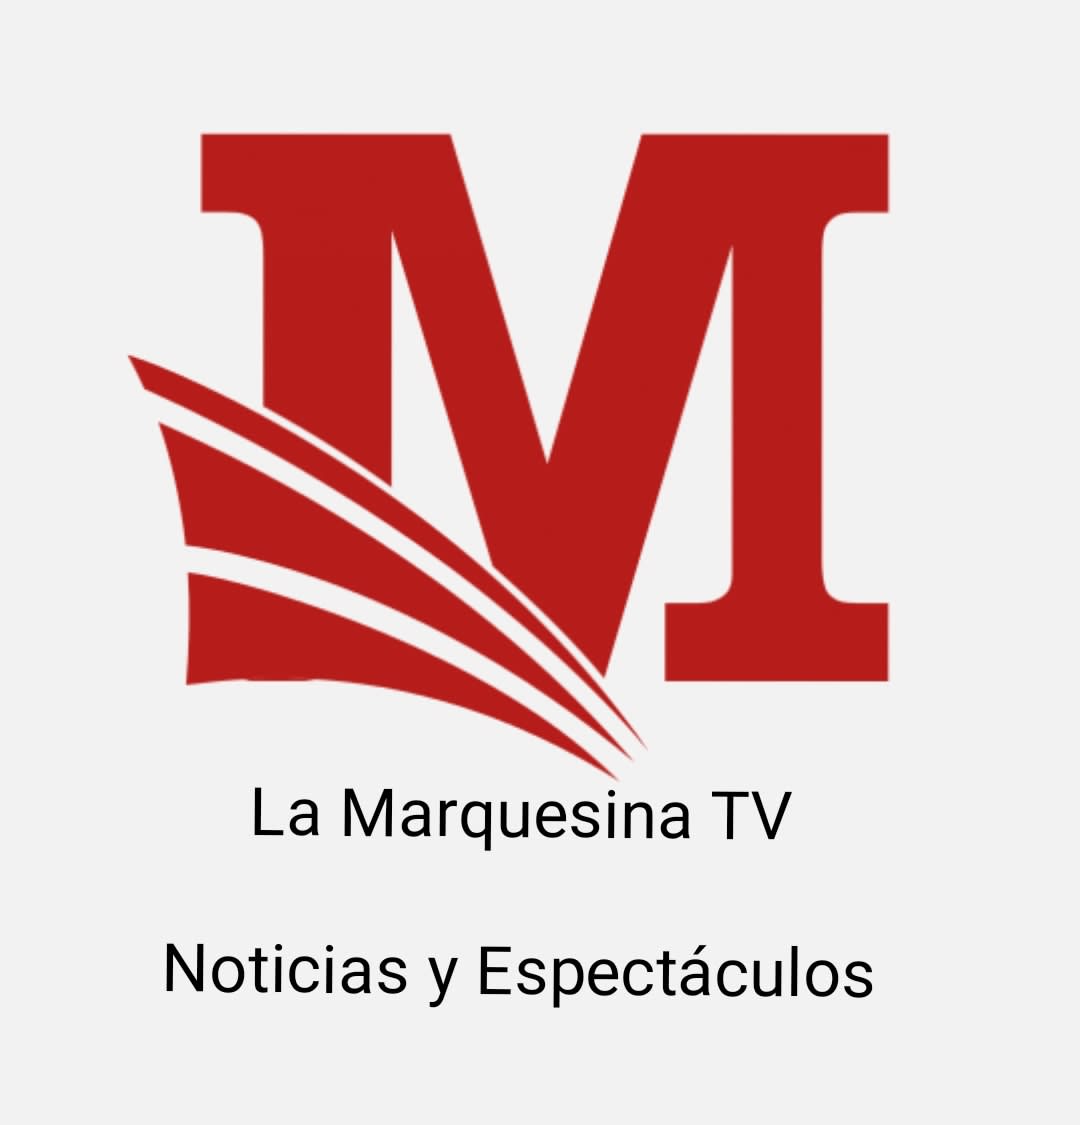 La Marquesina Tv